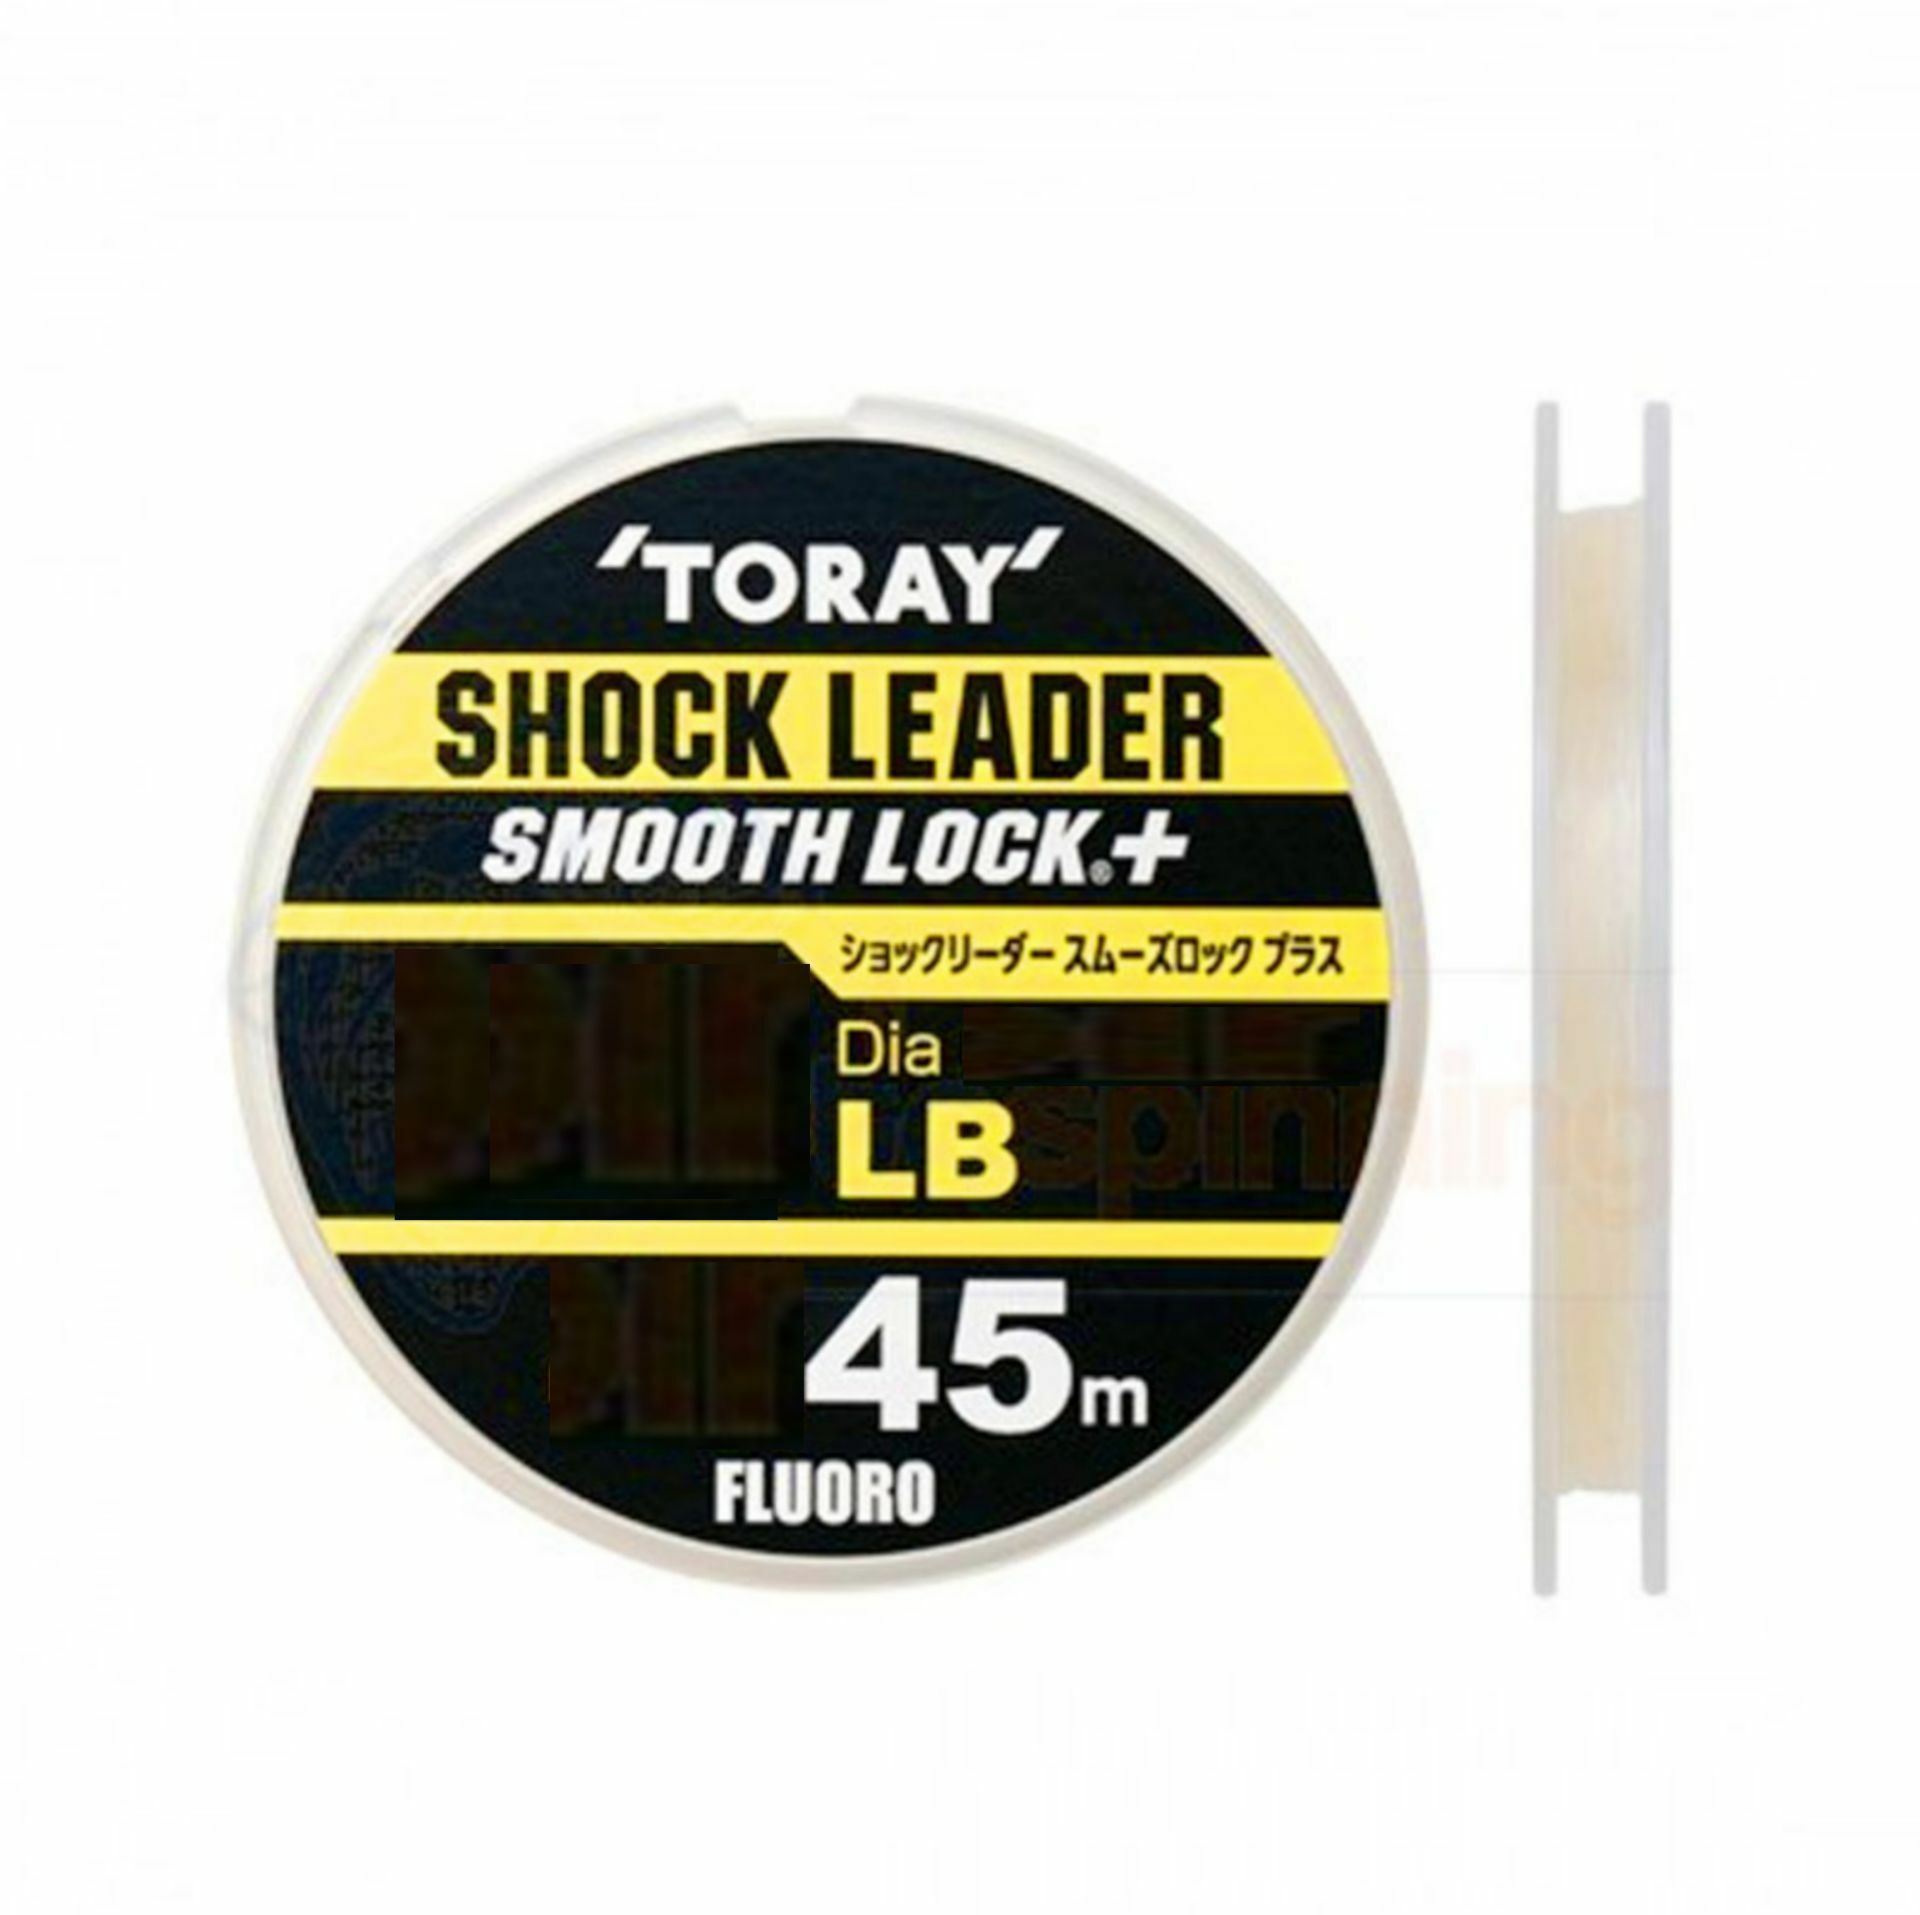 Toray Smooth Lock + Shock Leader 32LB/0.470mm